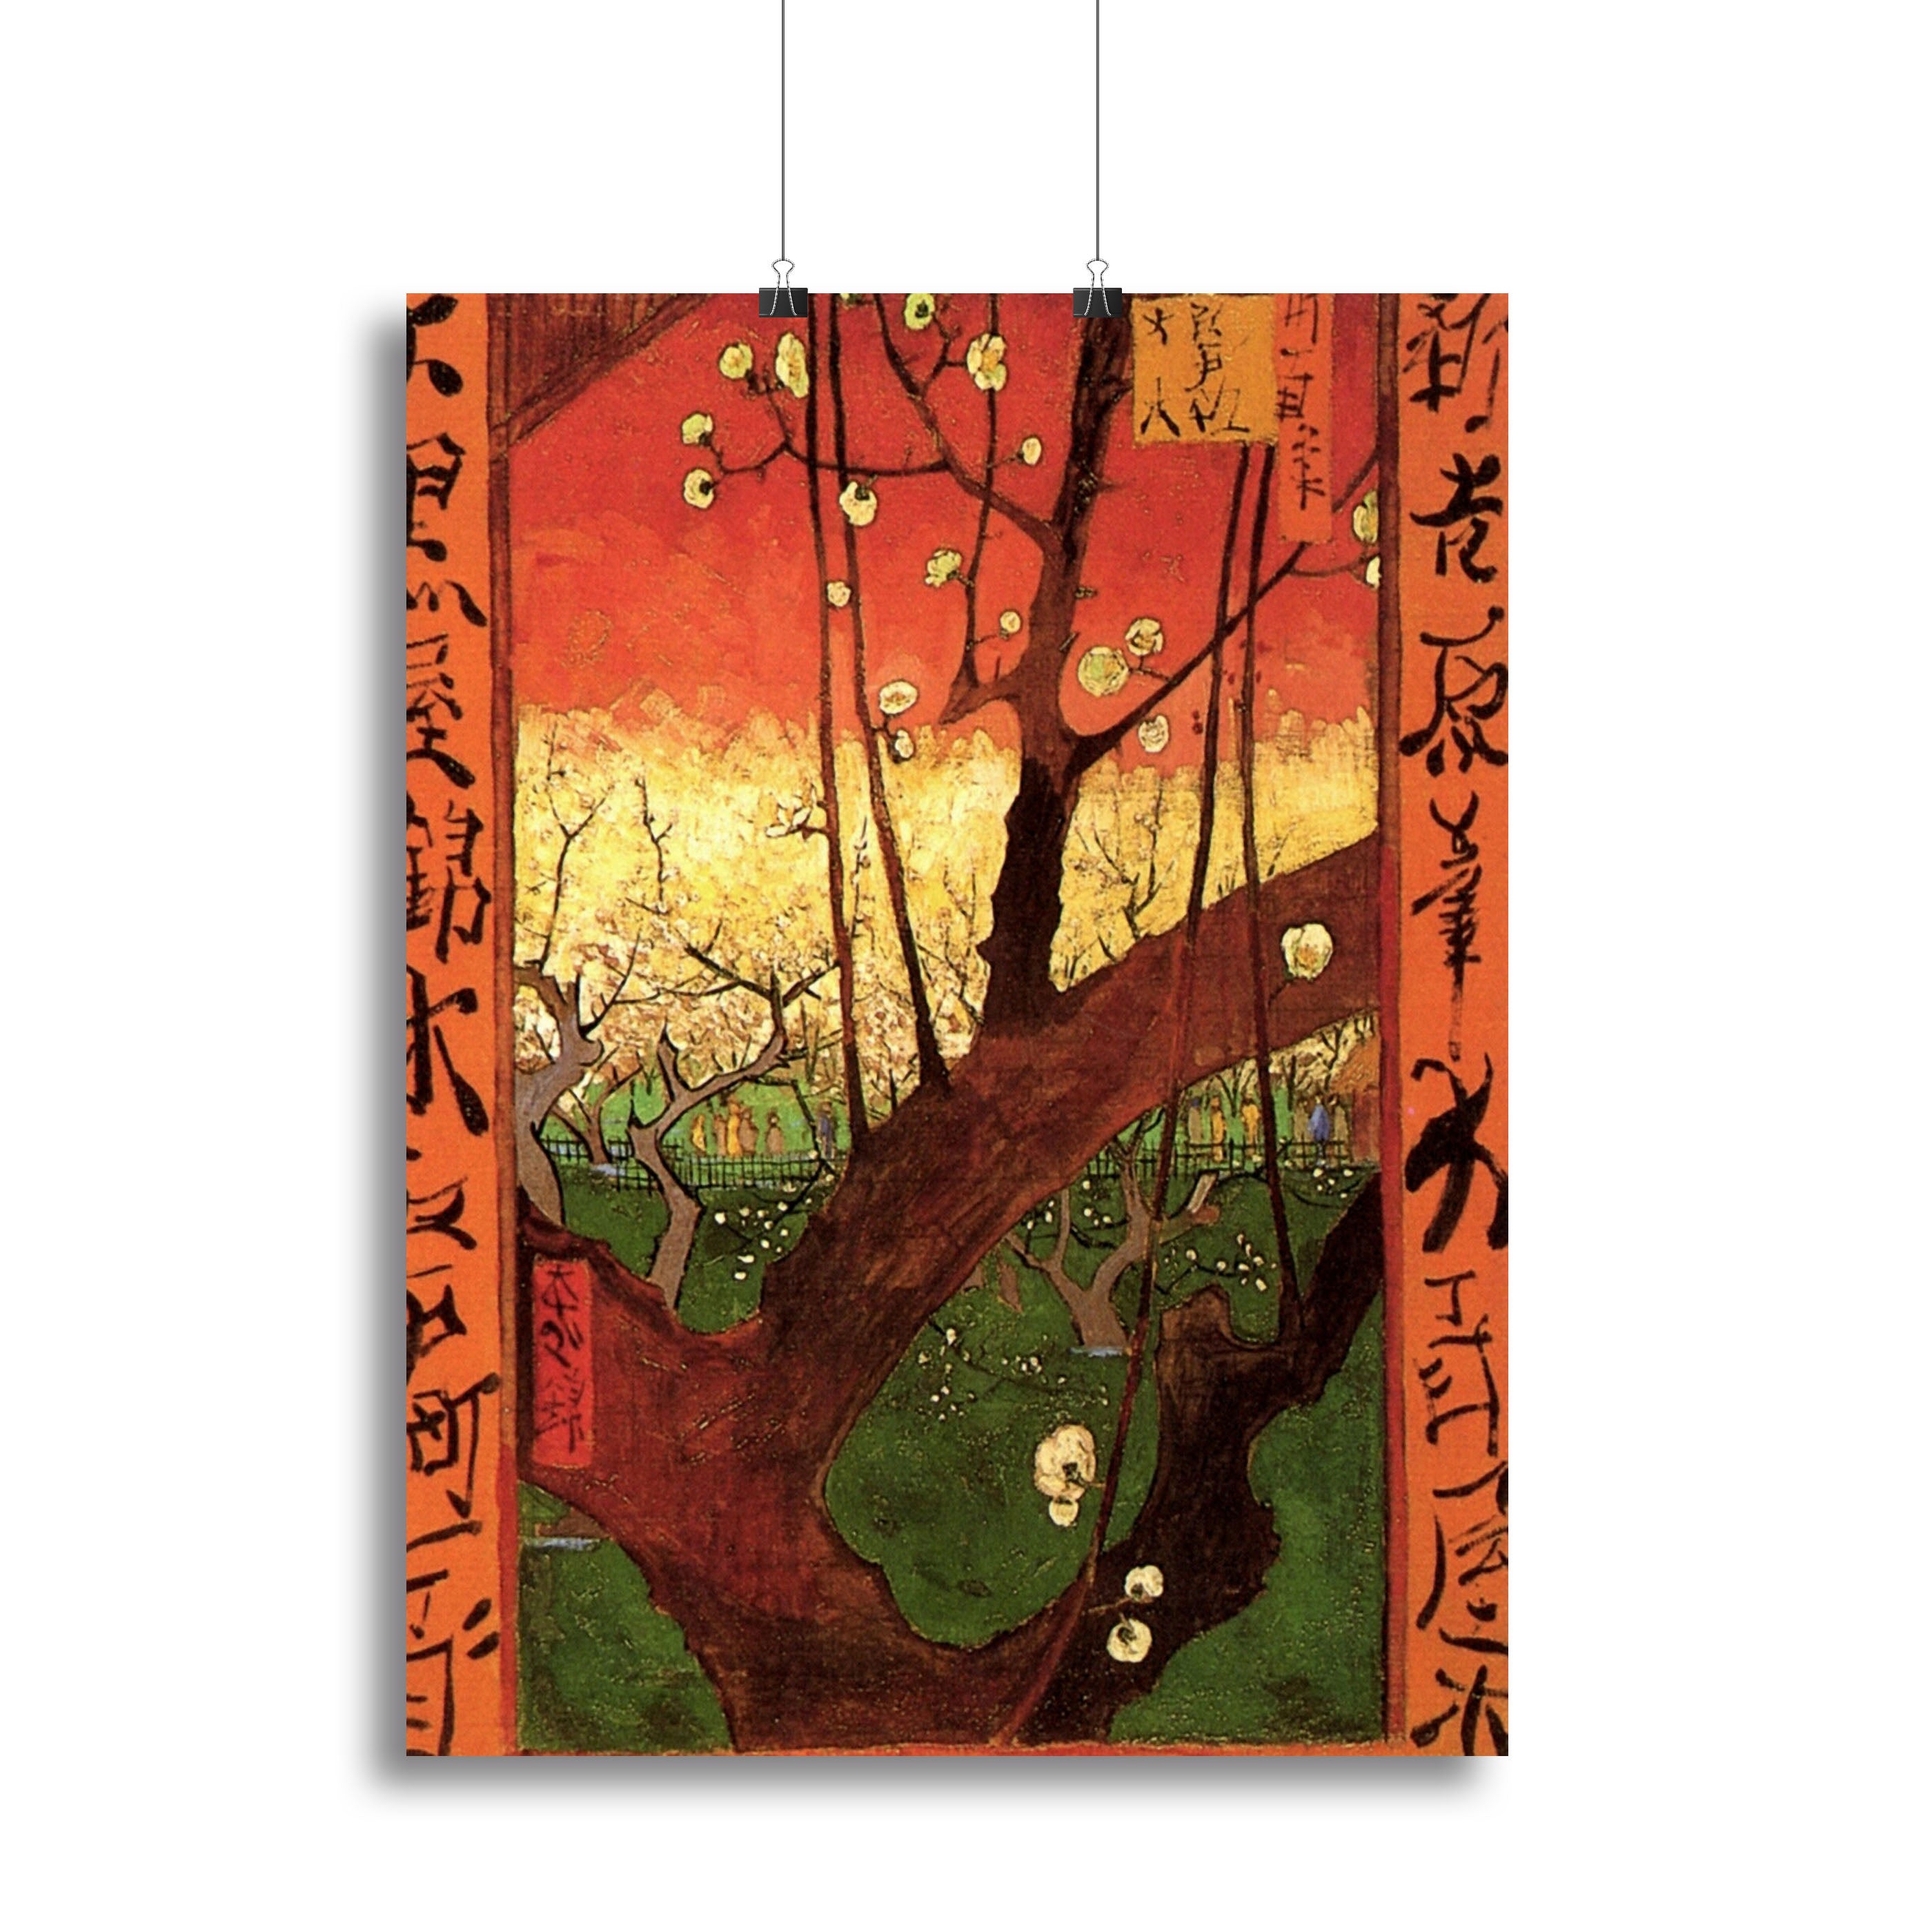 Japonaiserie Flowering Plum Tree after Hiroshige by Van Gogh Canvas Print or Poster - Canvas Art Rocks - 2